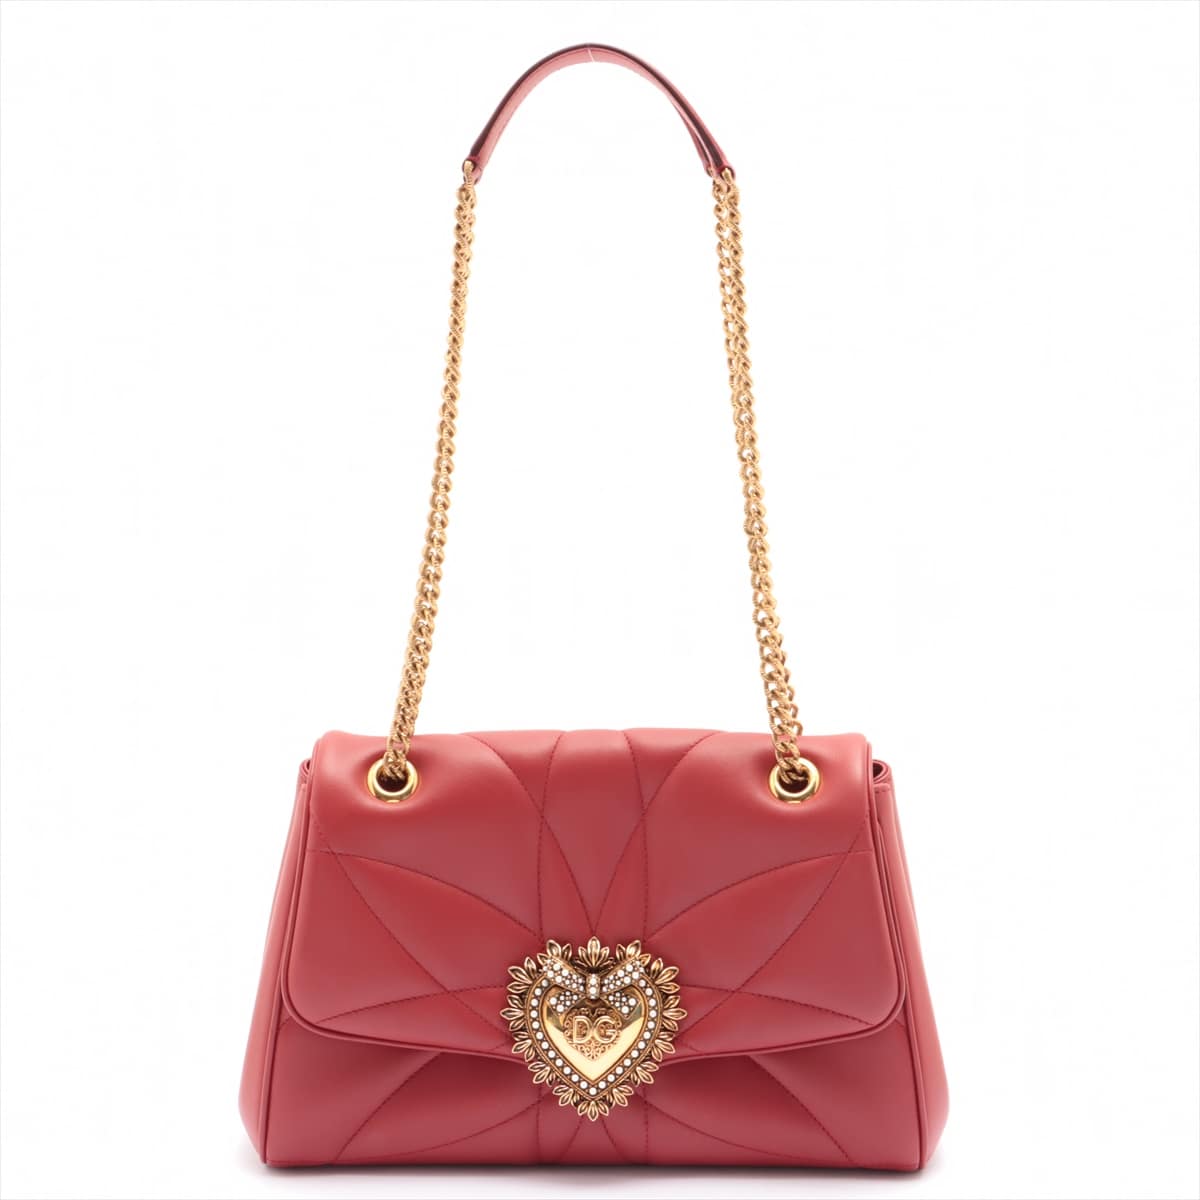 Dolce & Gabbana Devotion Leather Chain shoulder bag Red